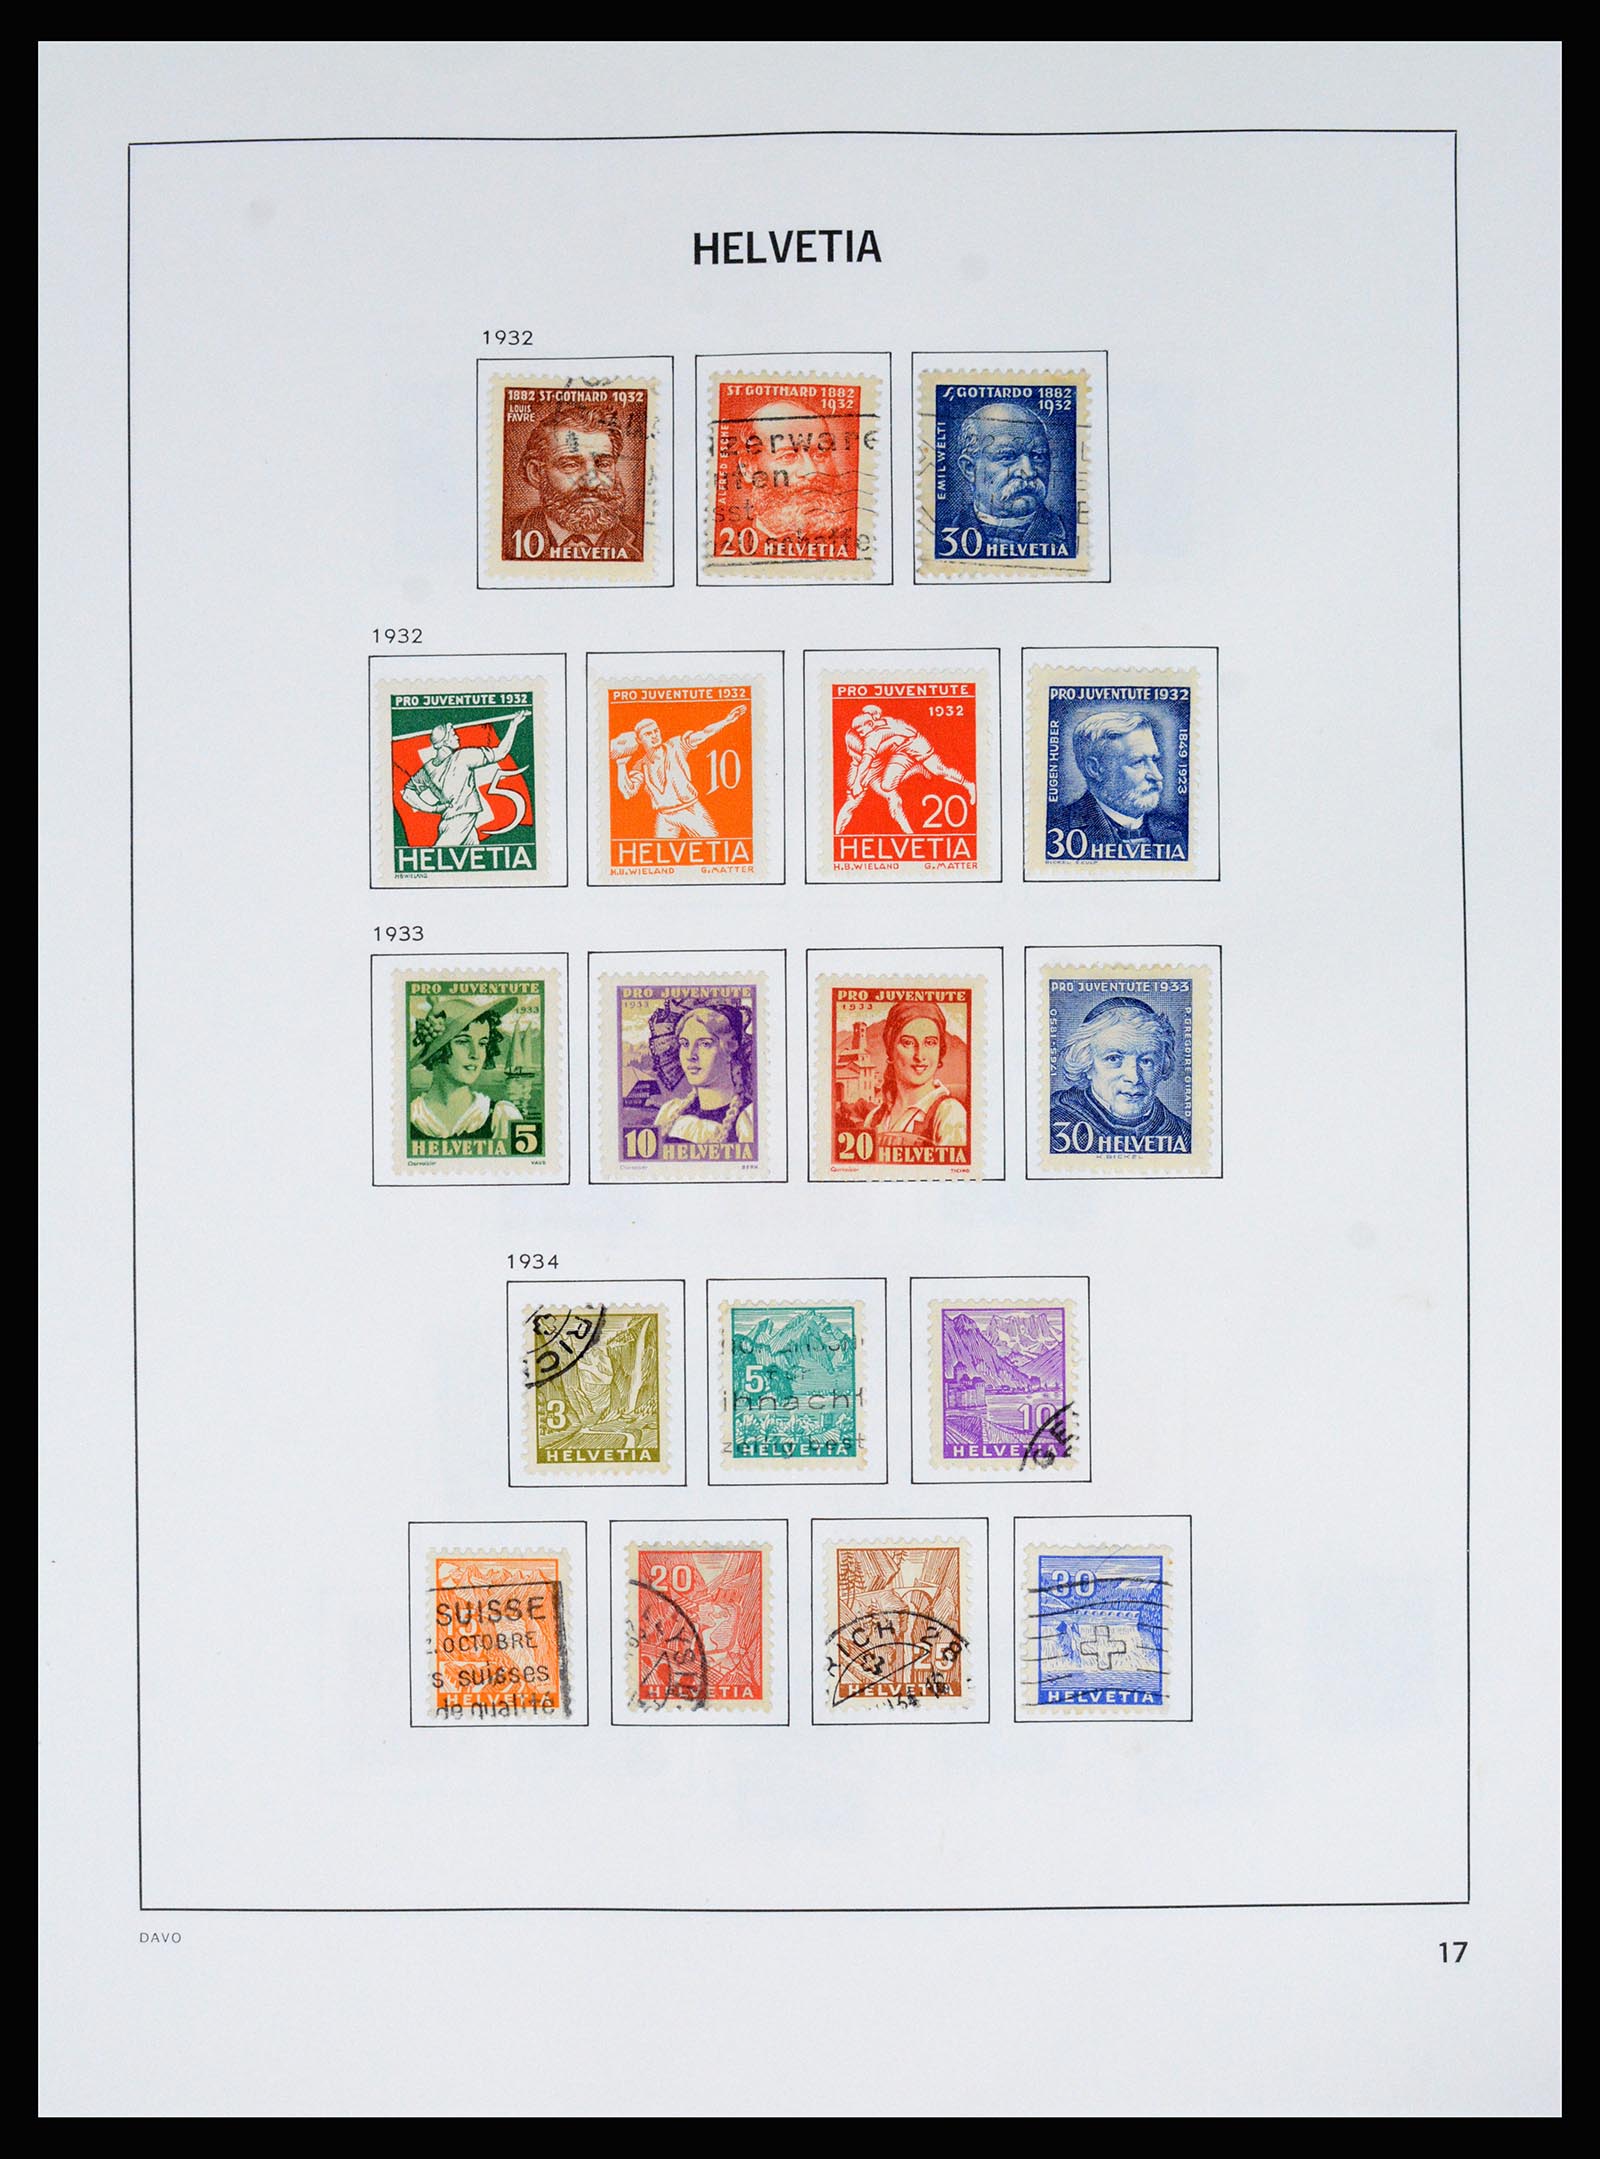 37157 024 - Stamp collection 37157 Switzerland 1843-1996.